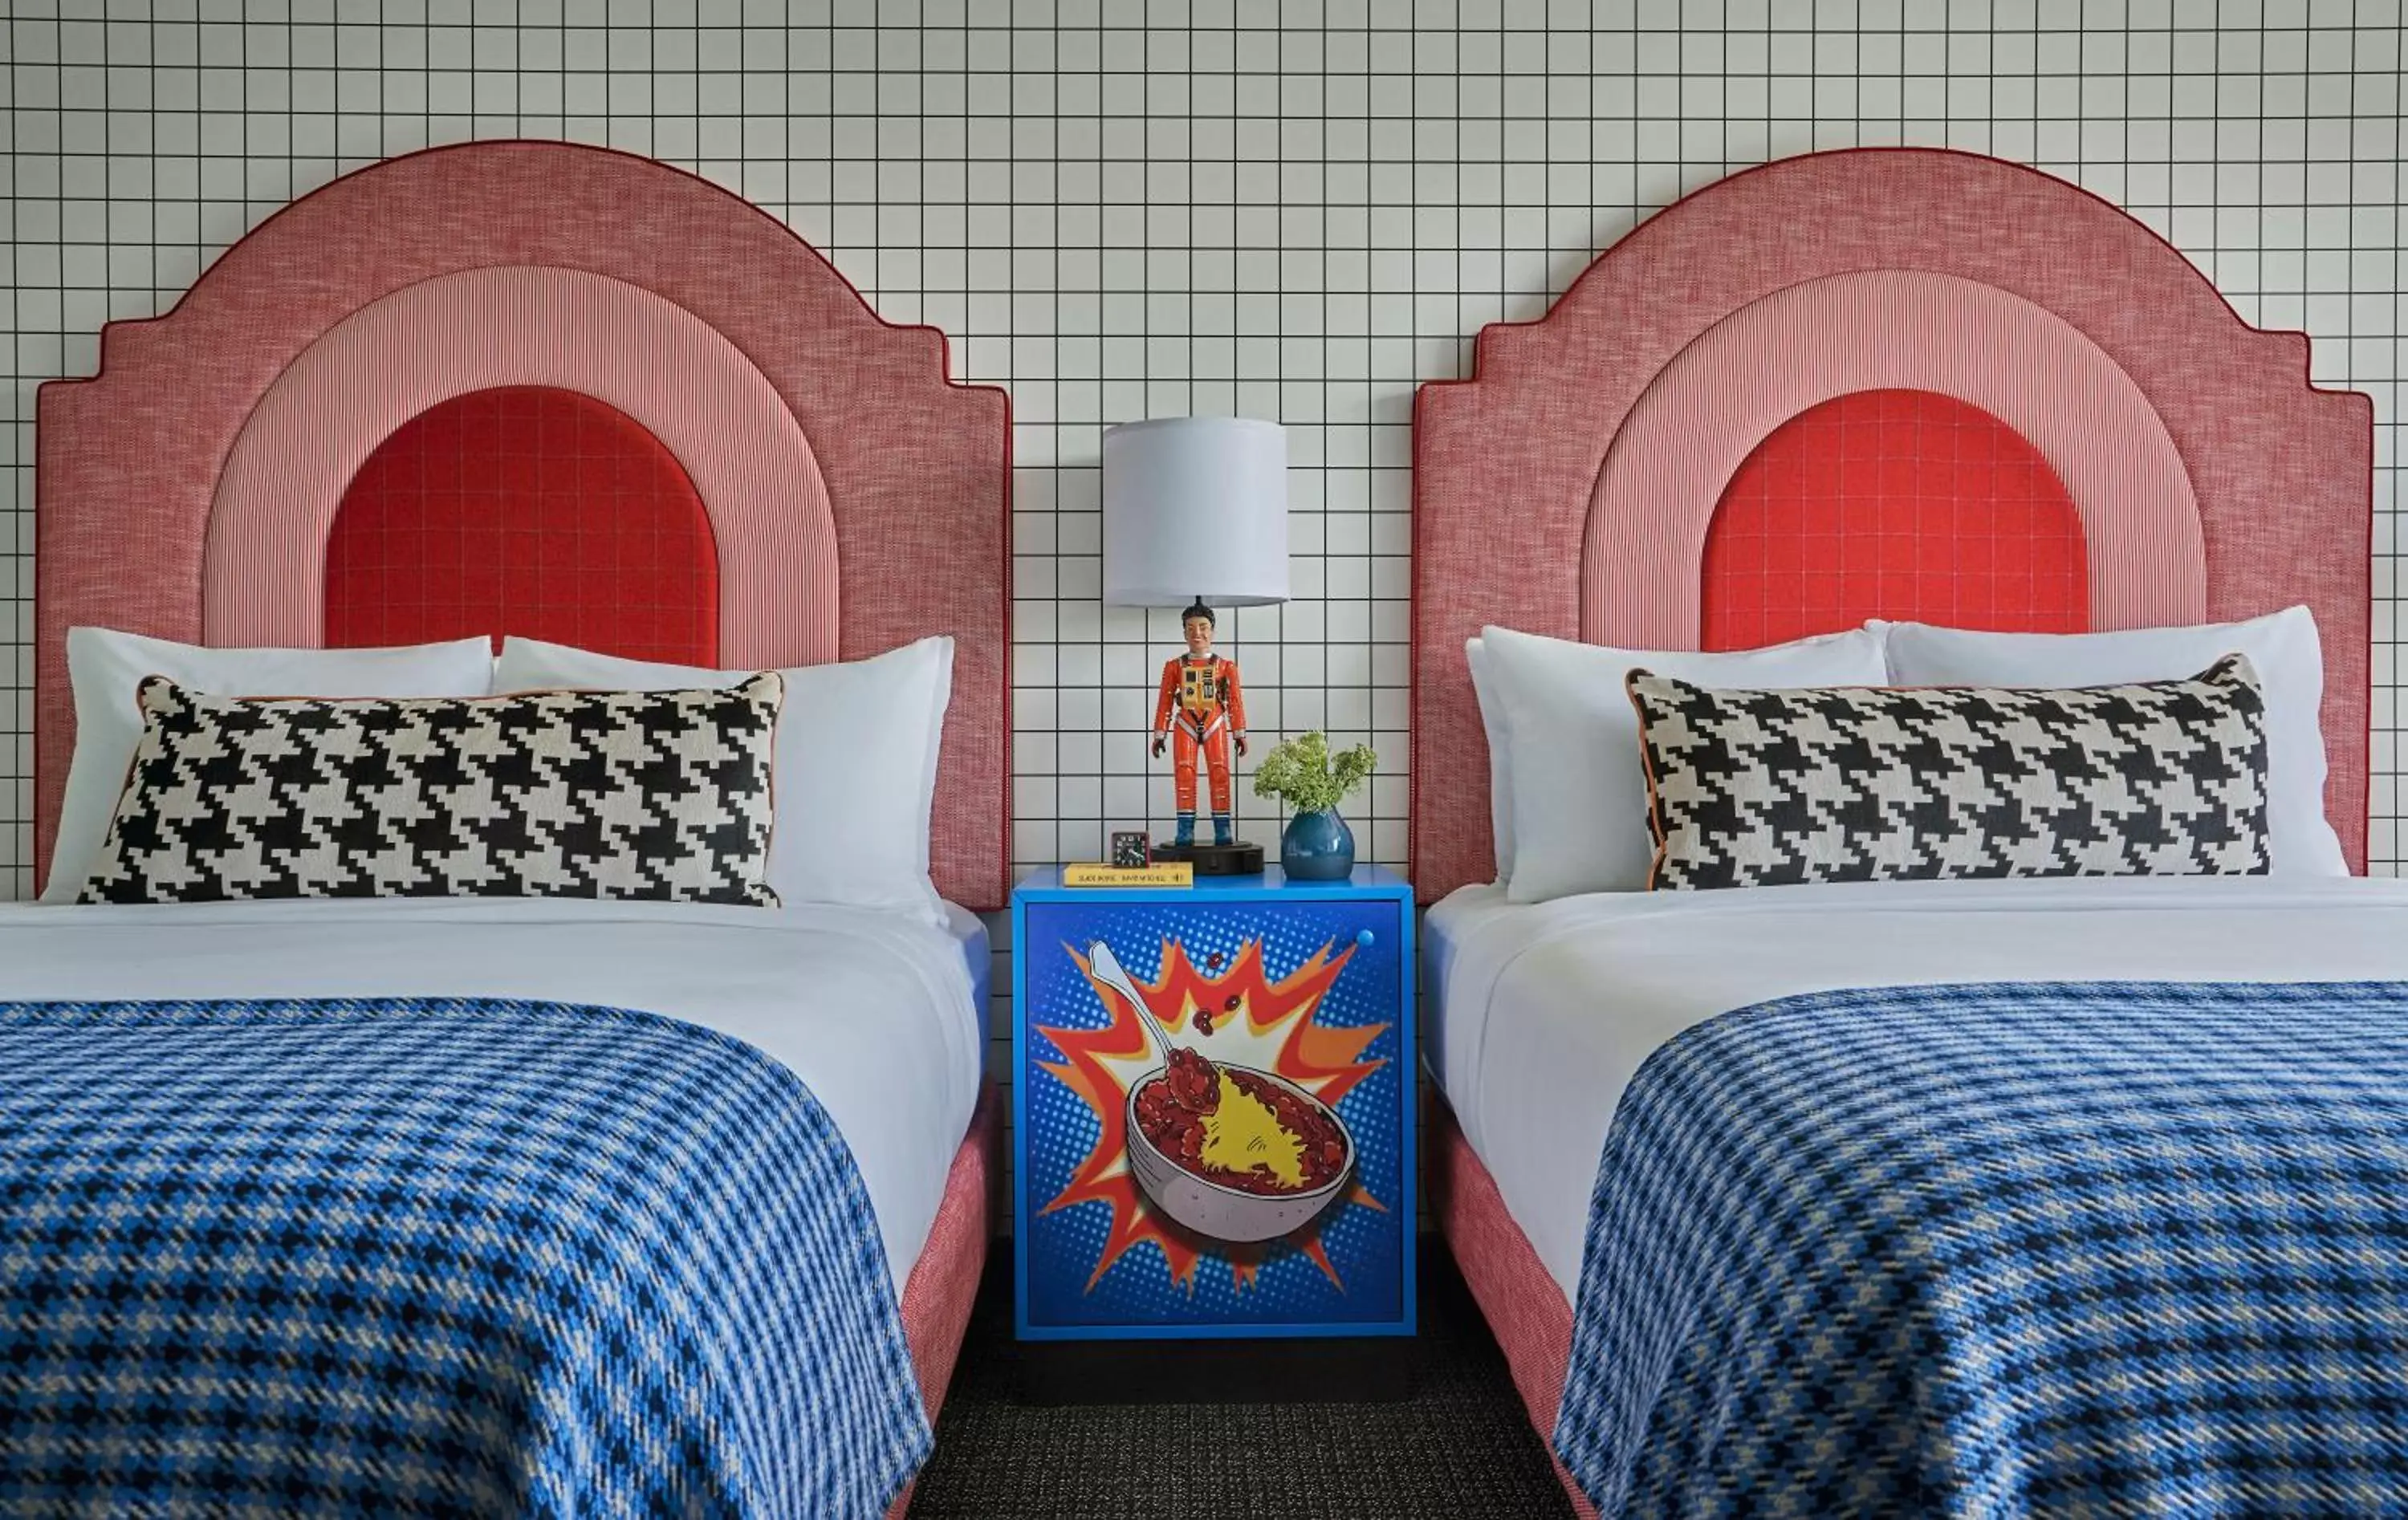 Bed, Room Photo in Graduate Cincinnati